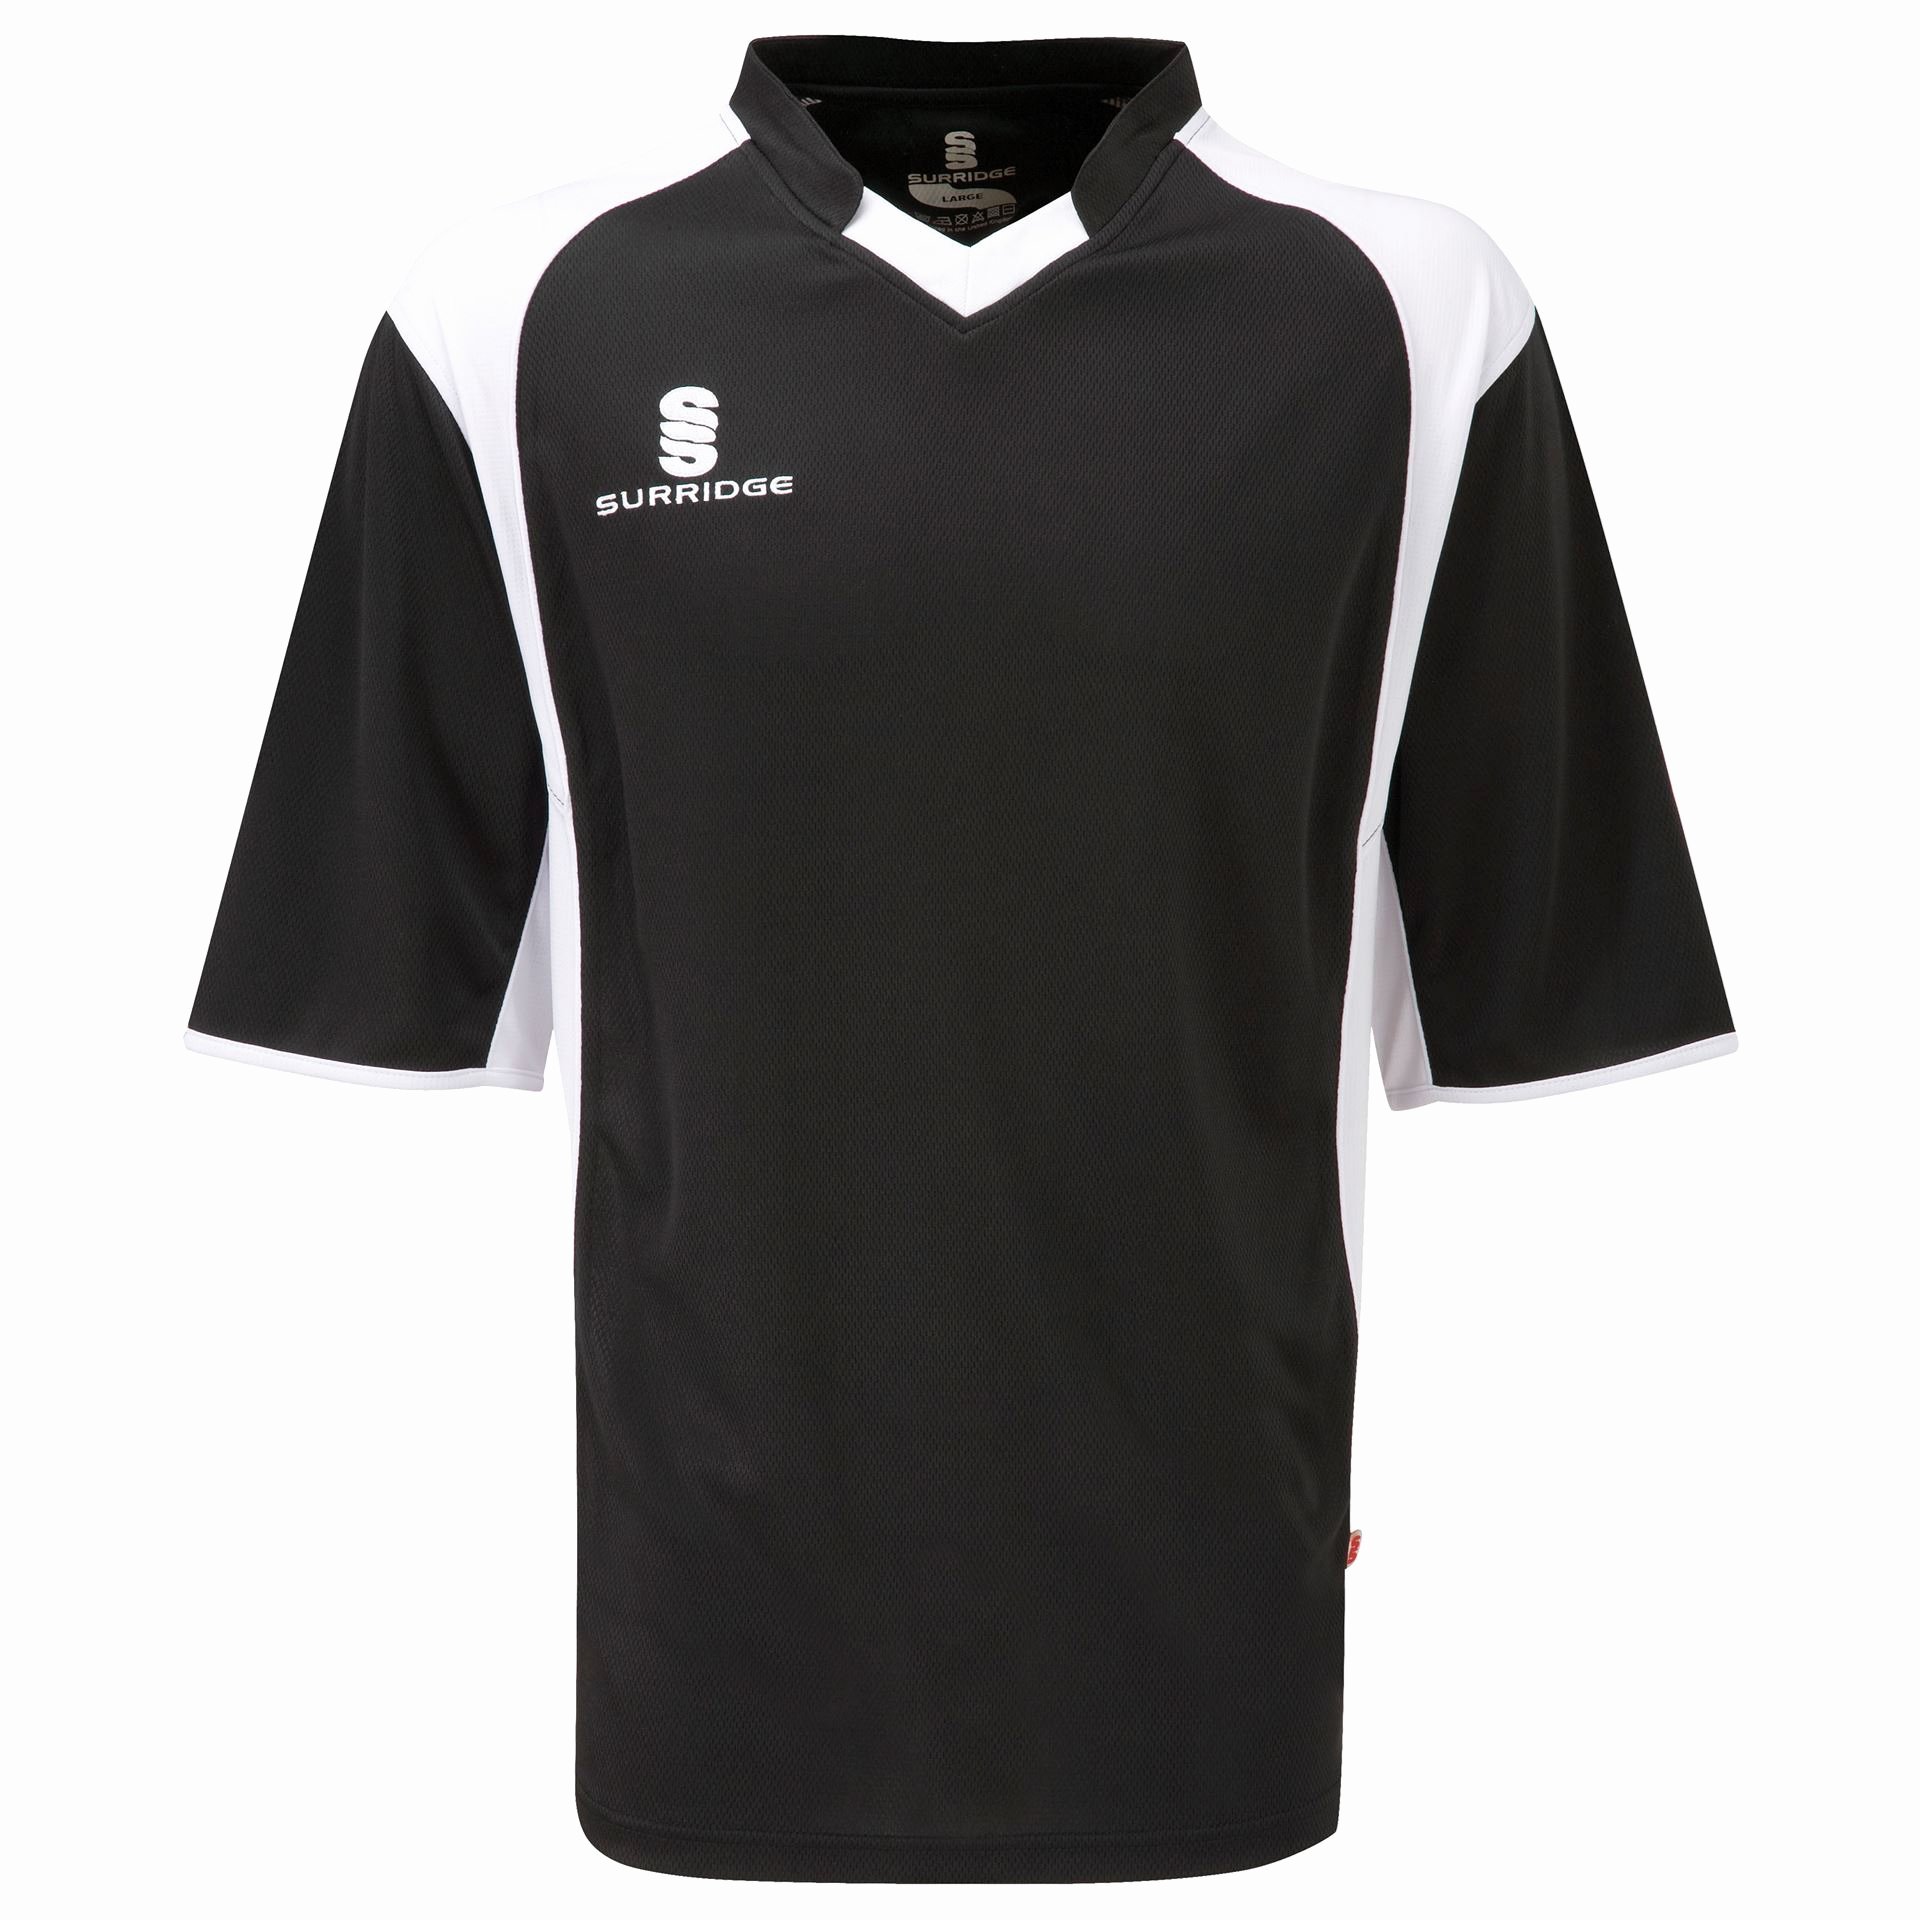 Sport T Shirt Design Ideas Luxury Surridge Sport Training T Shirt Black White